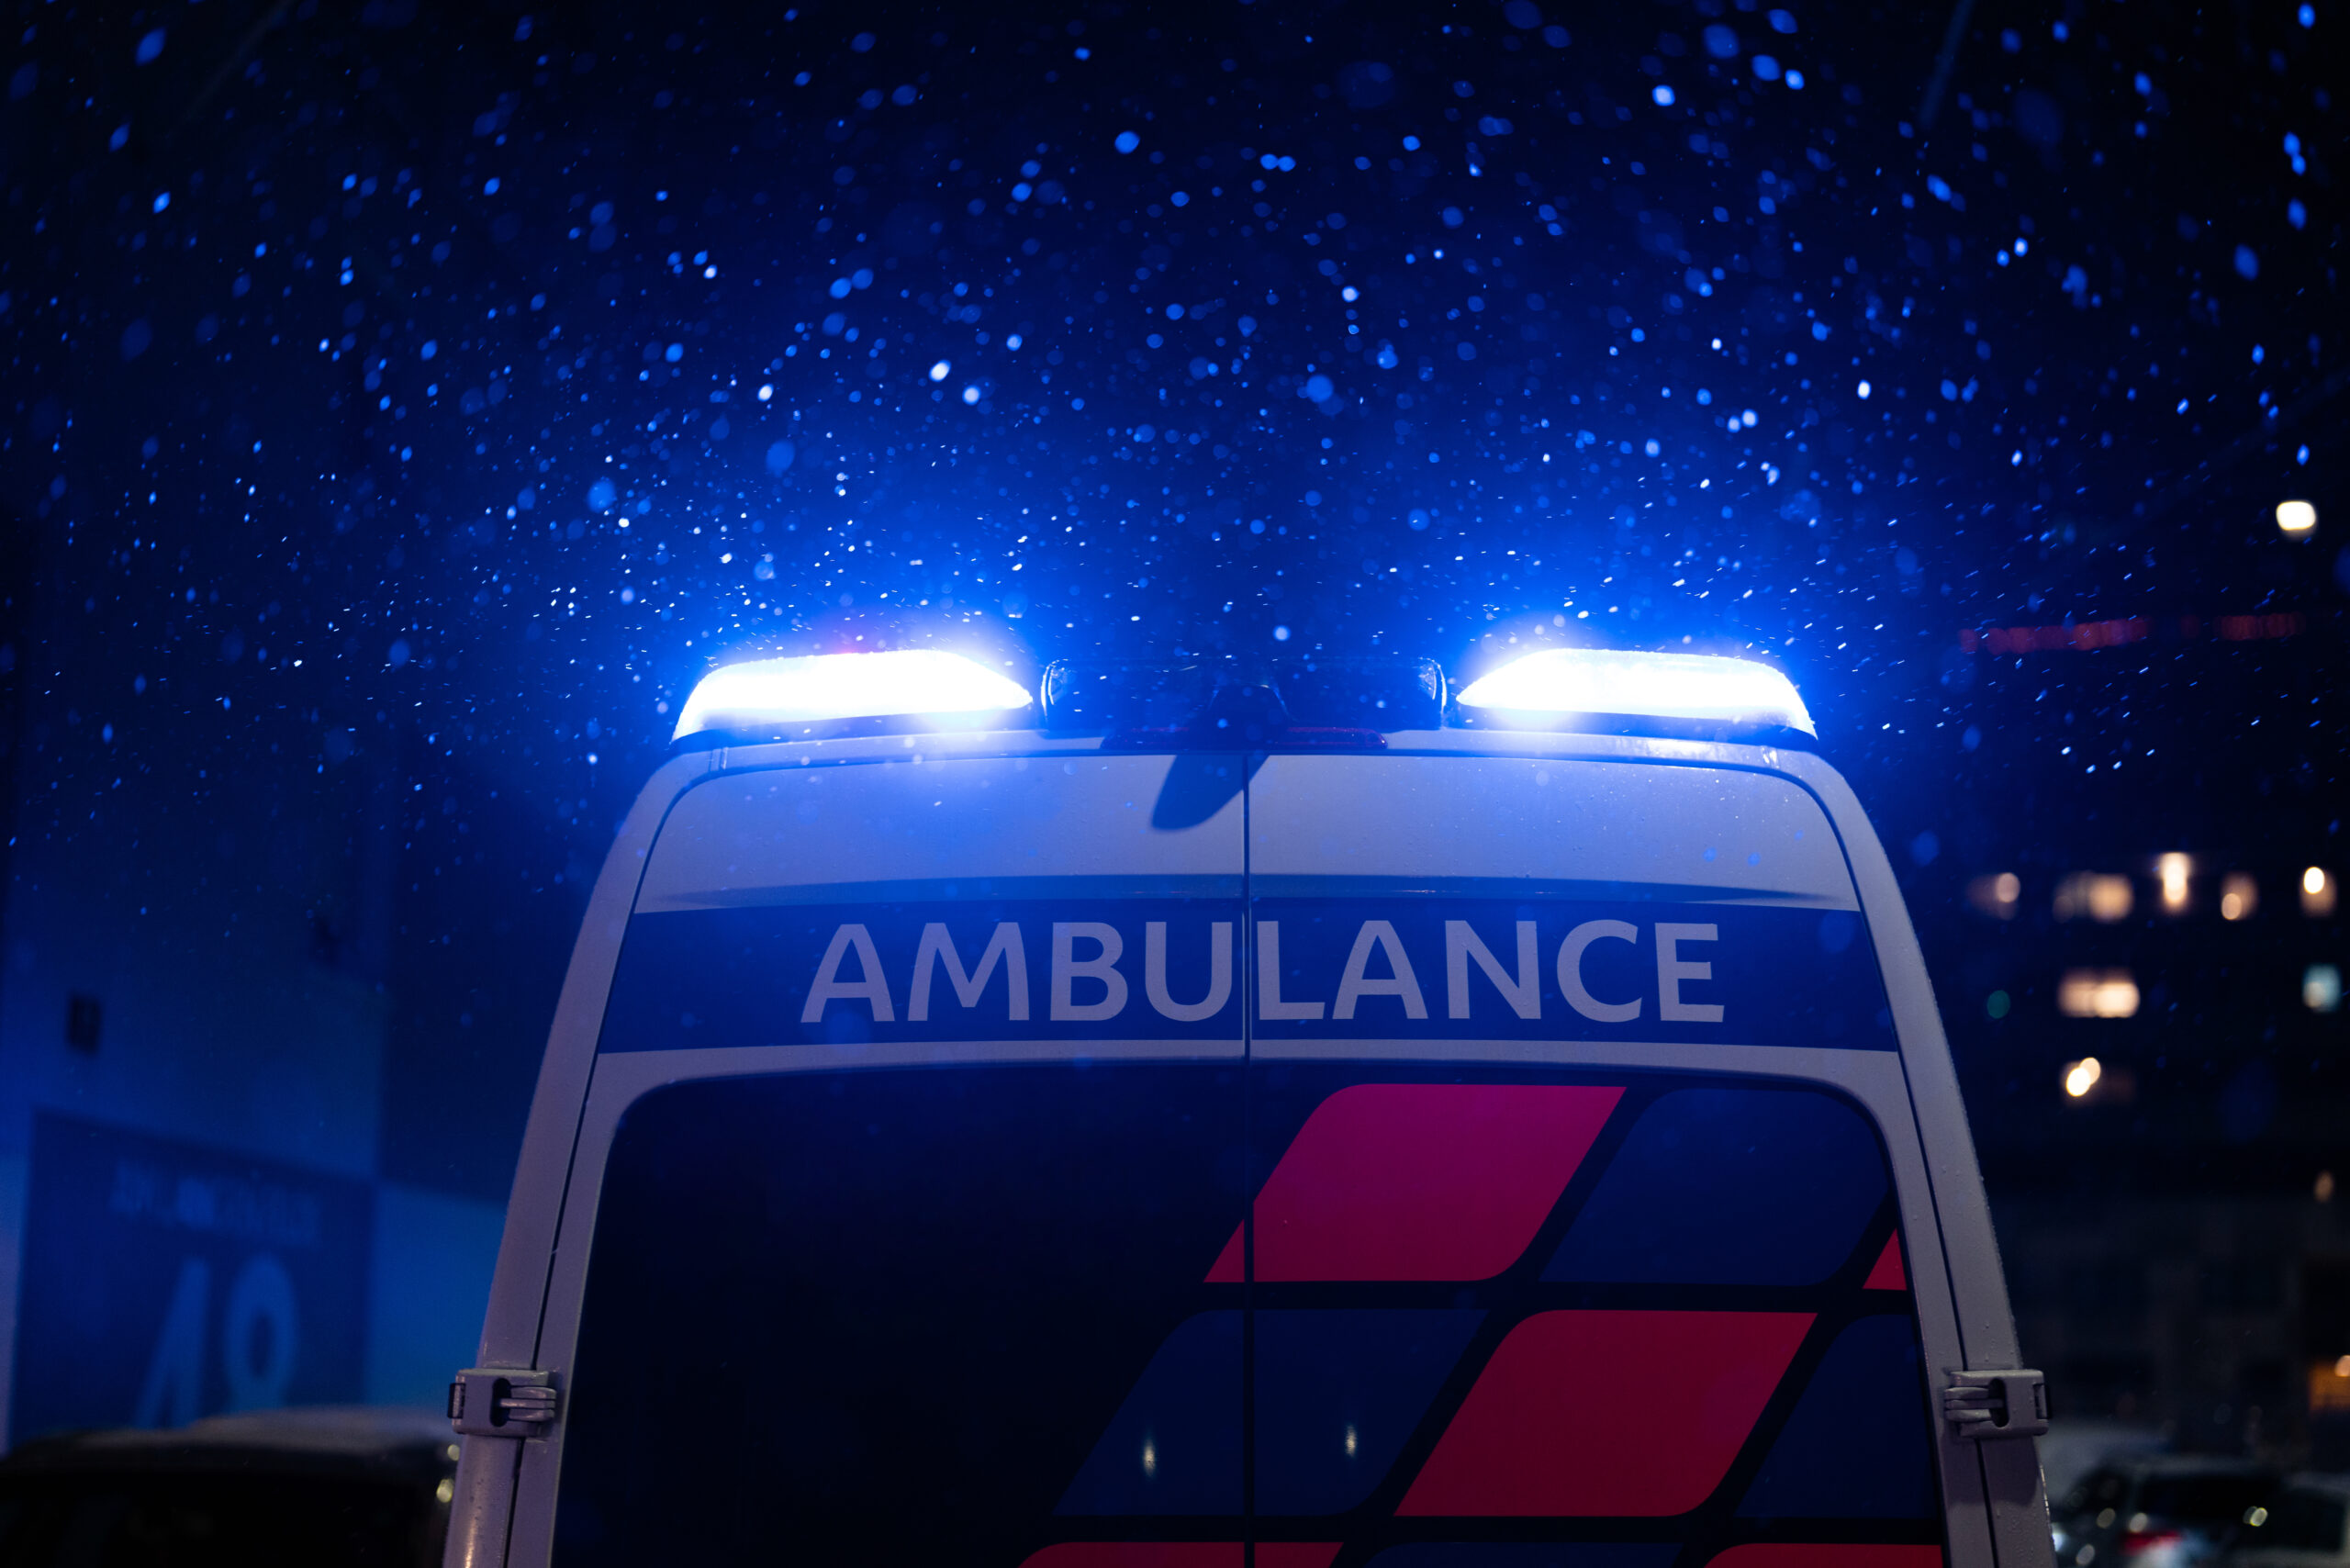 ambulance with lights on at night